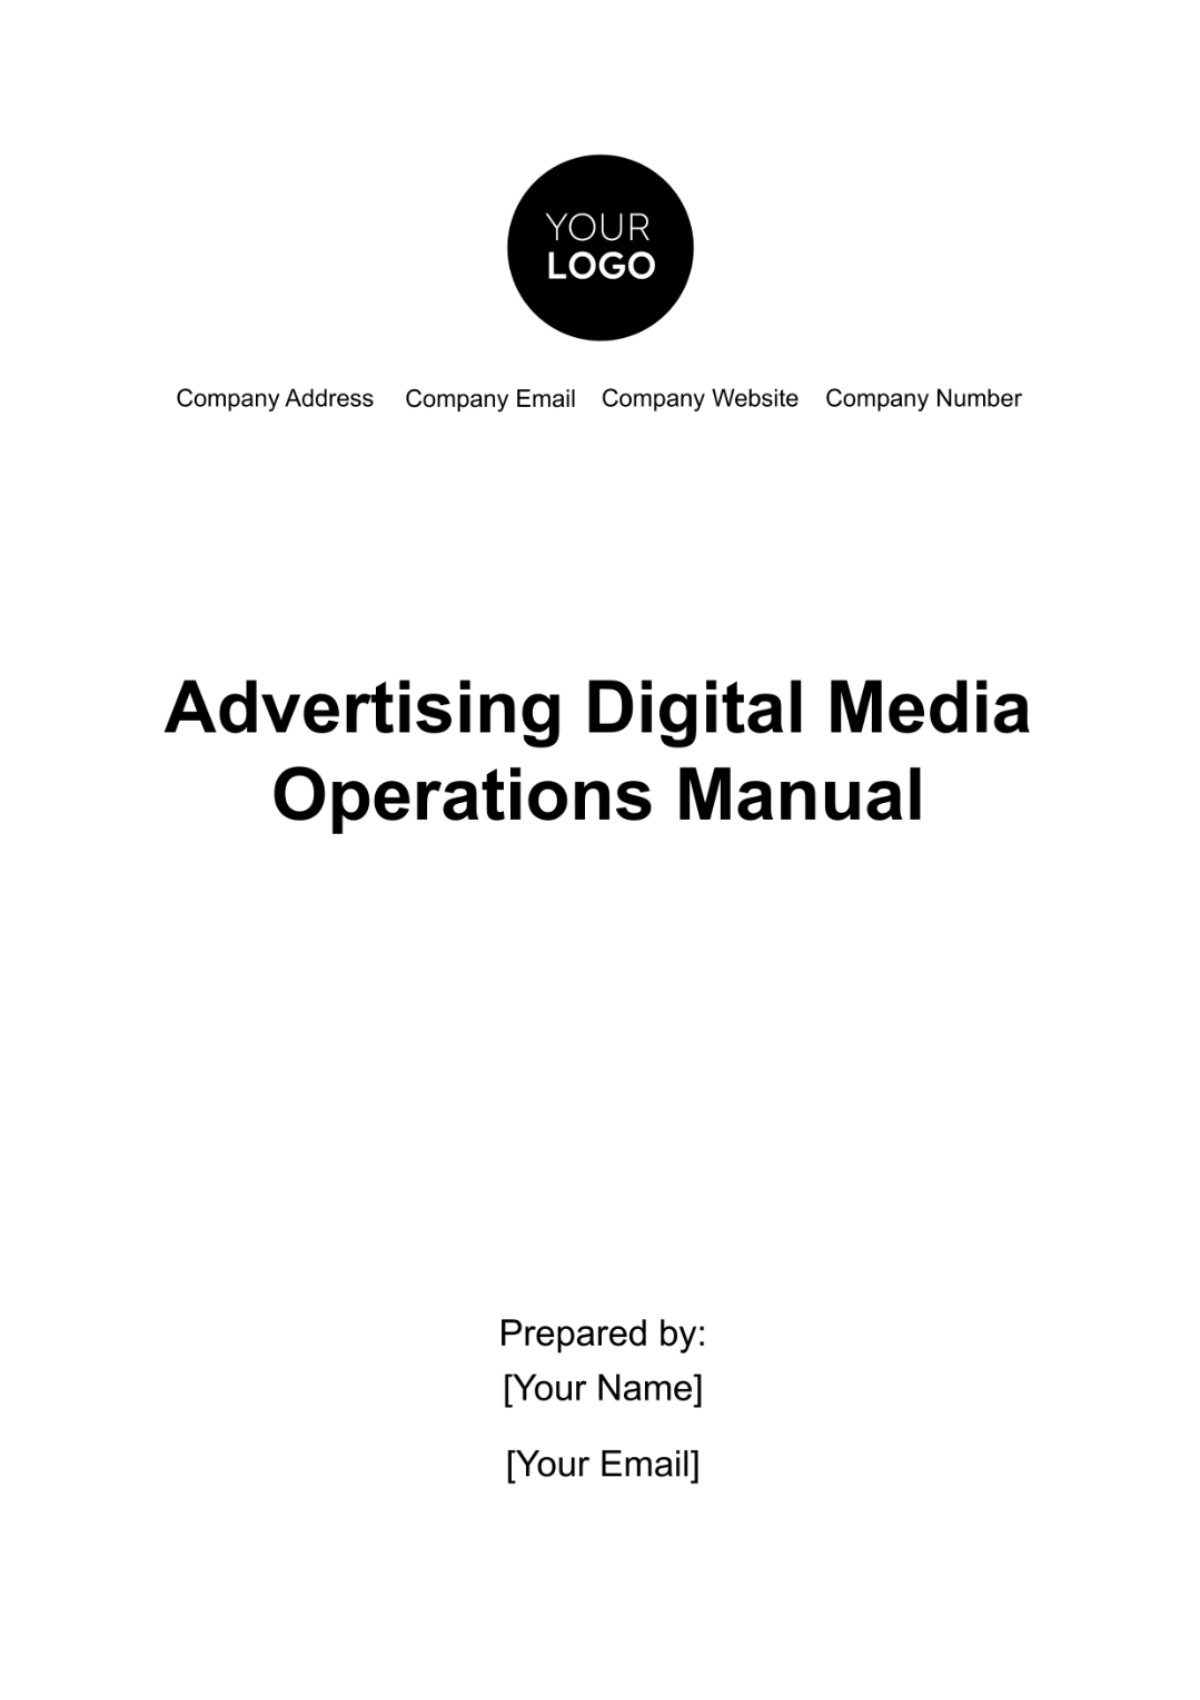 Free Advertising Digital Media Operations Manual Template